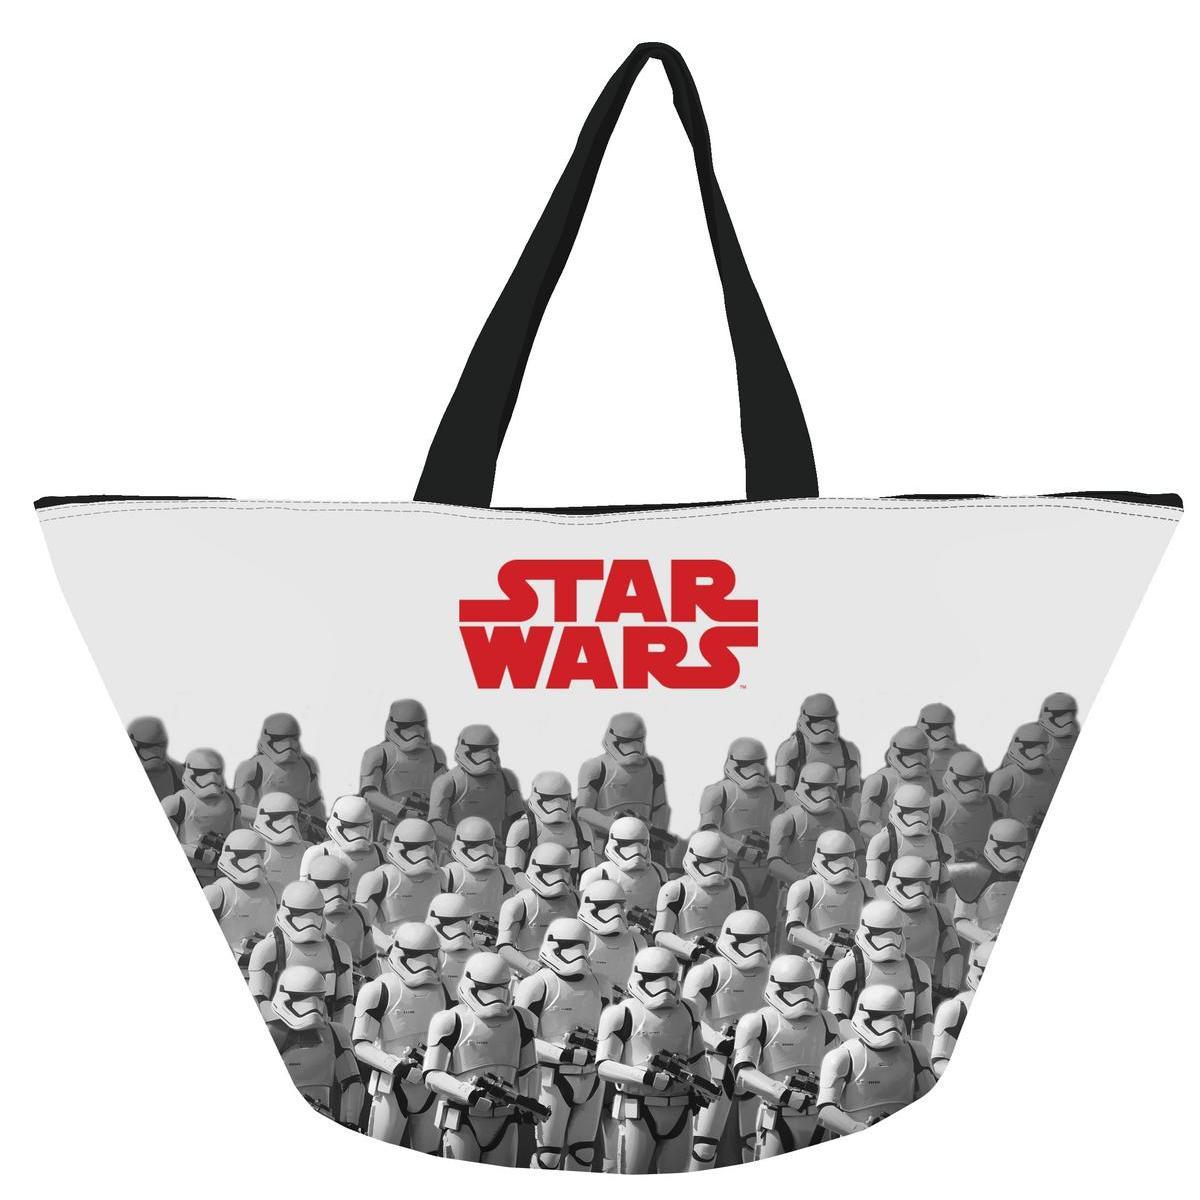 Grand sac Star Wars - Polyester - 57 x 30 x 33 cm - Blanc, gris et rouge